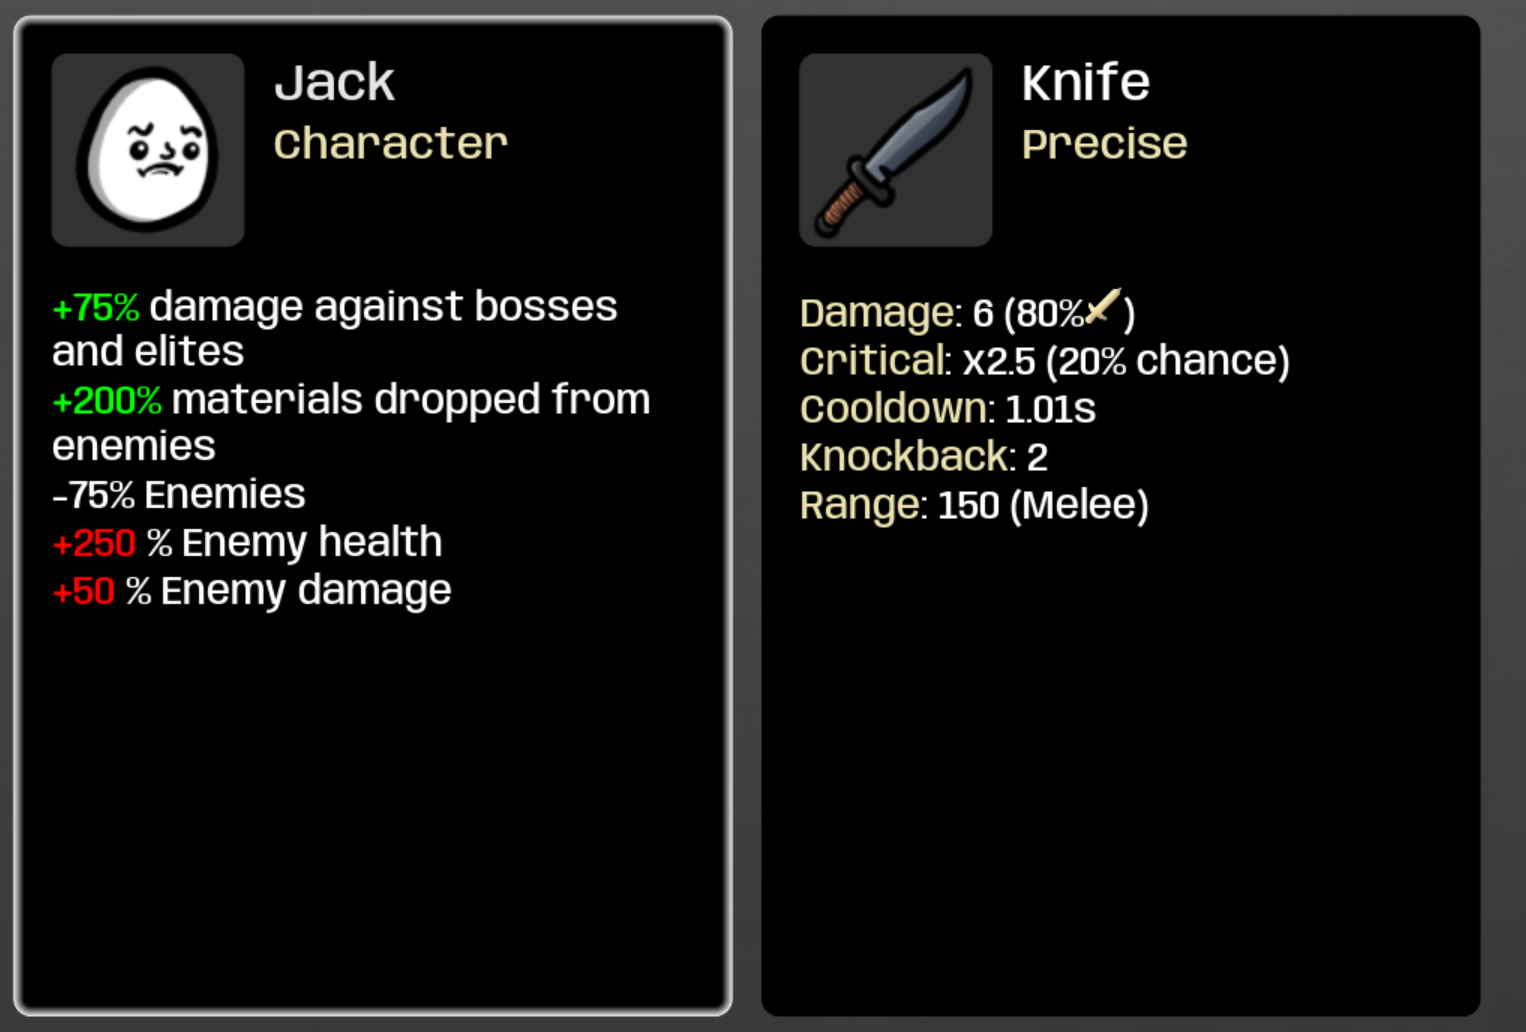 Brotato - Jack Build Knife